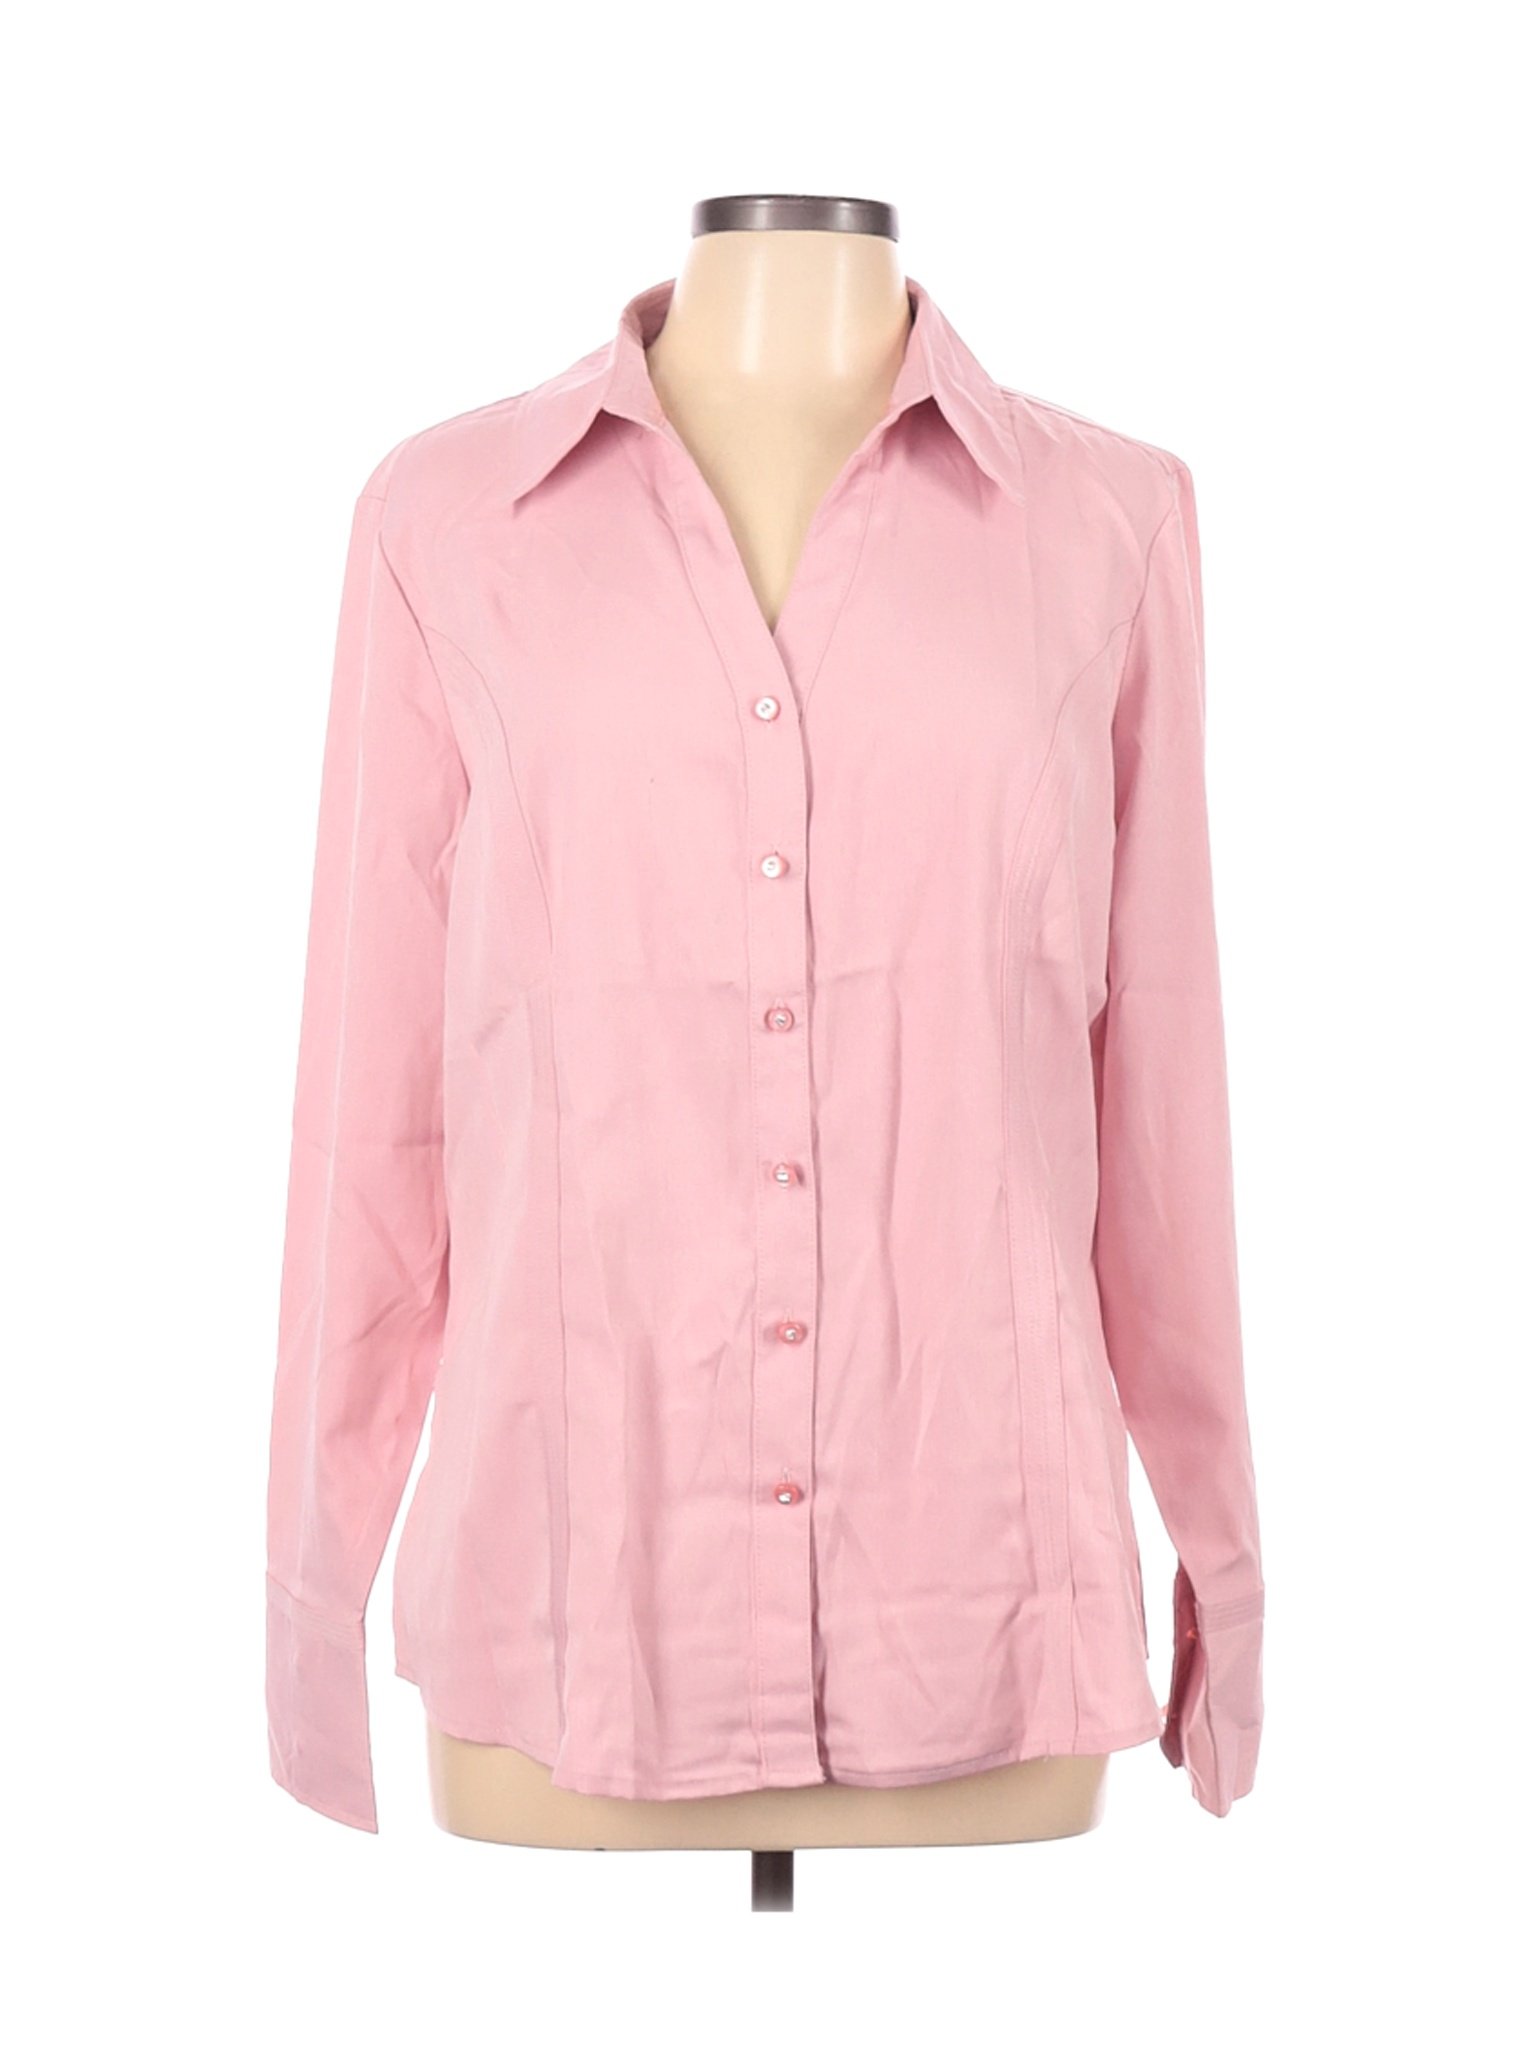 Cato Women Pink Long Sleeve Blouse XL | eBay